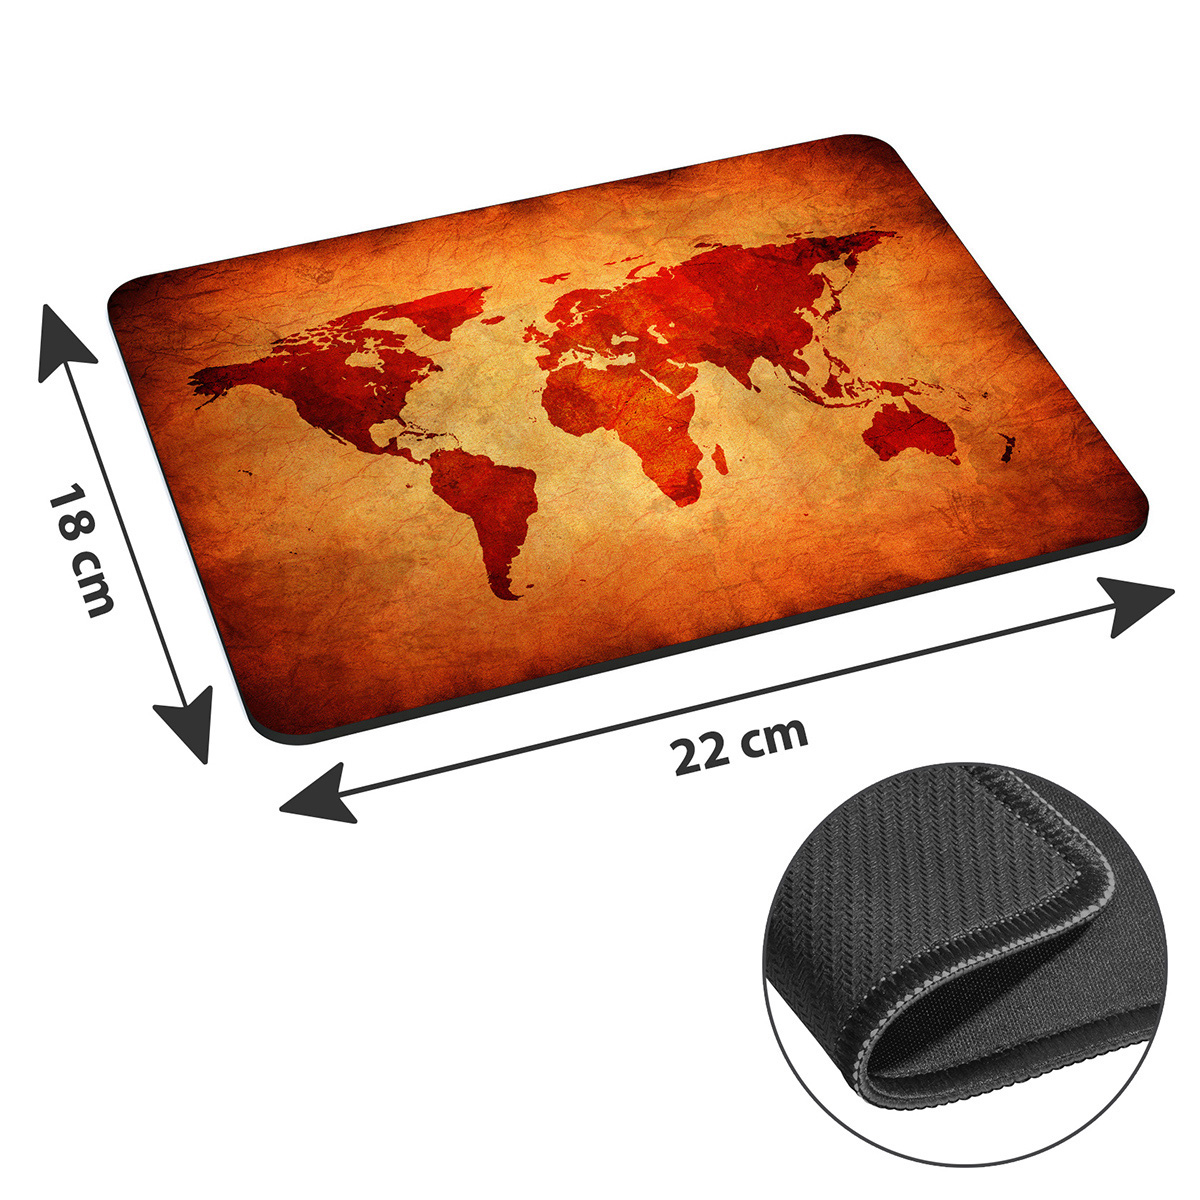 PEDEA Mauspad Design Map, Mauspad Global Brown Gr. cm) L (18 22 x cm